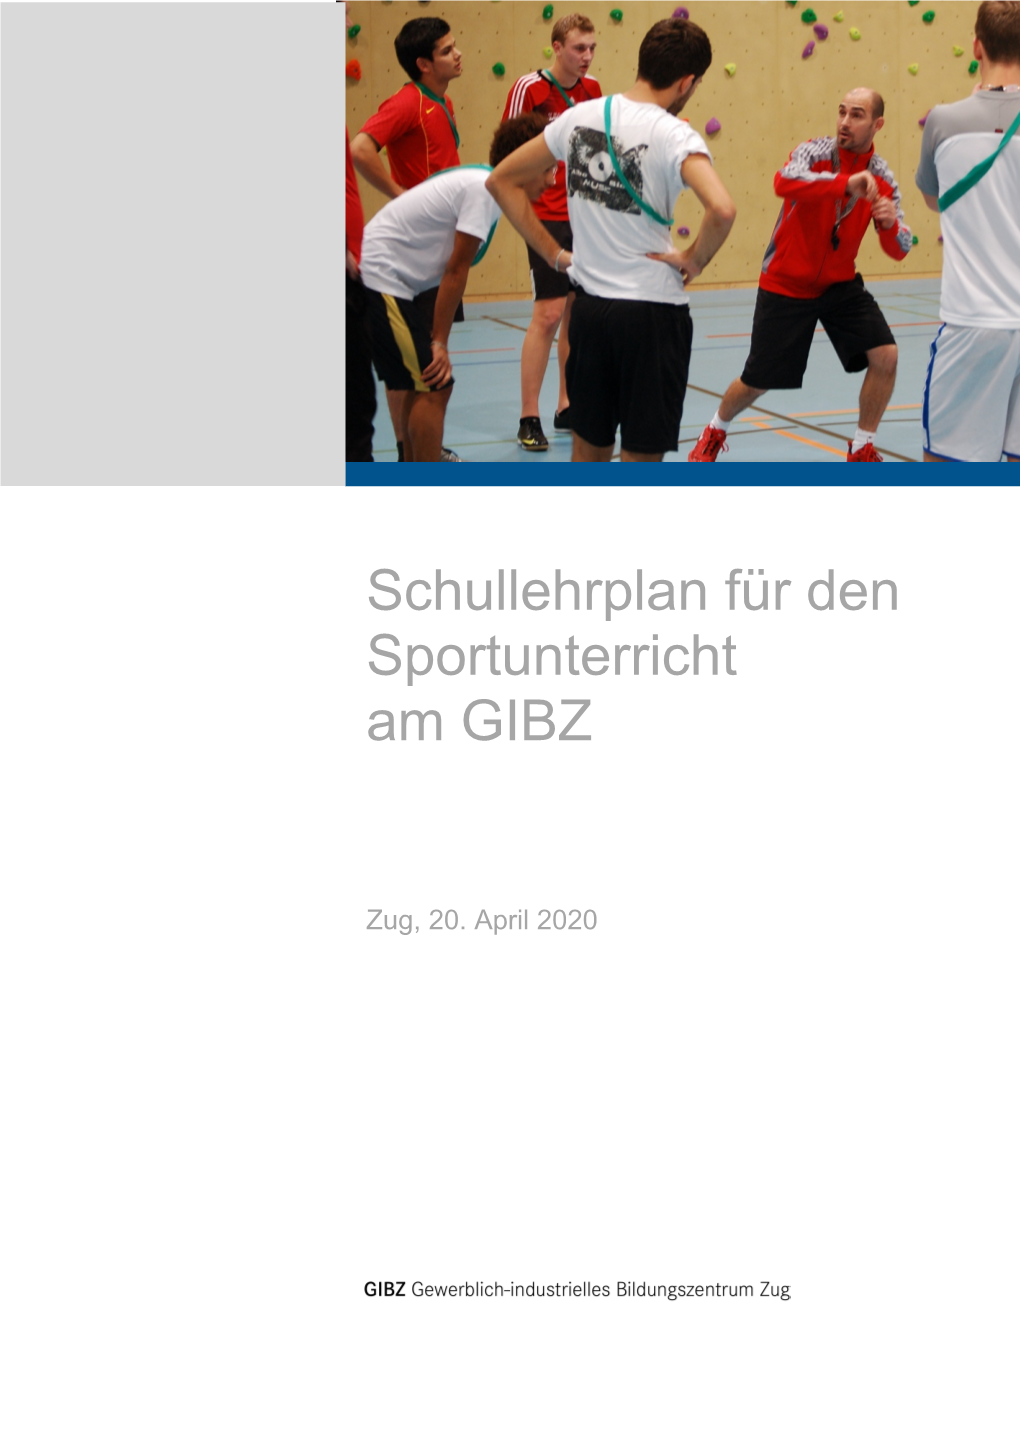 Schullehrplan Sport GIBZ 2020